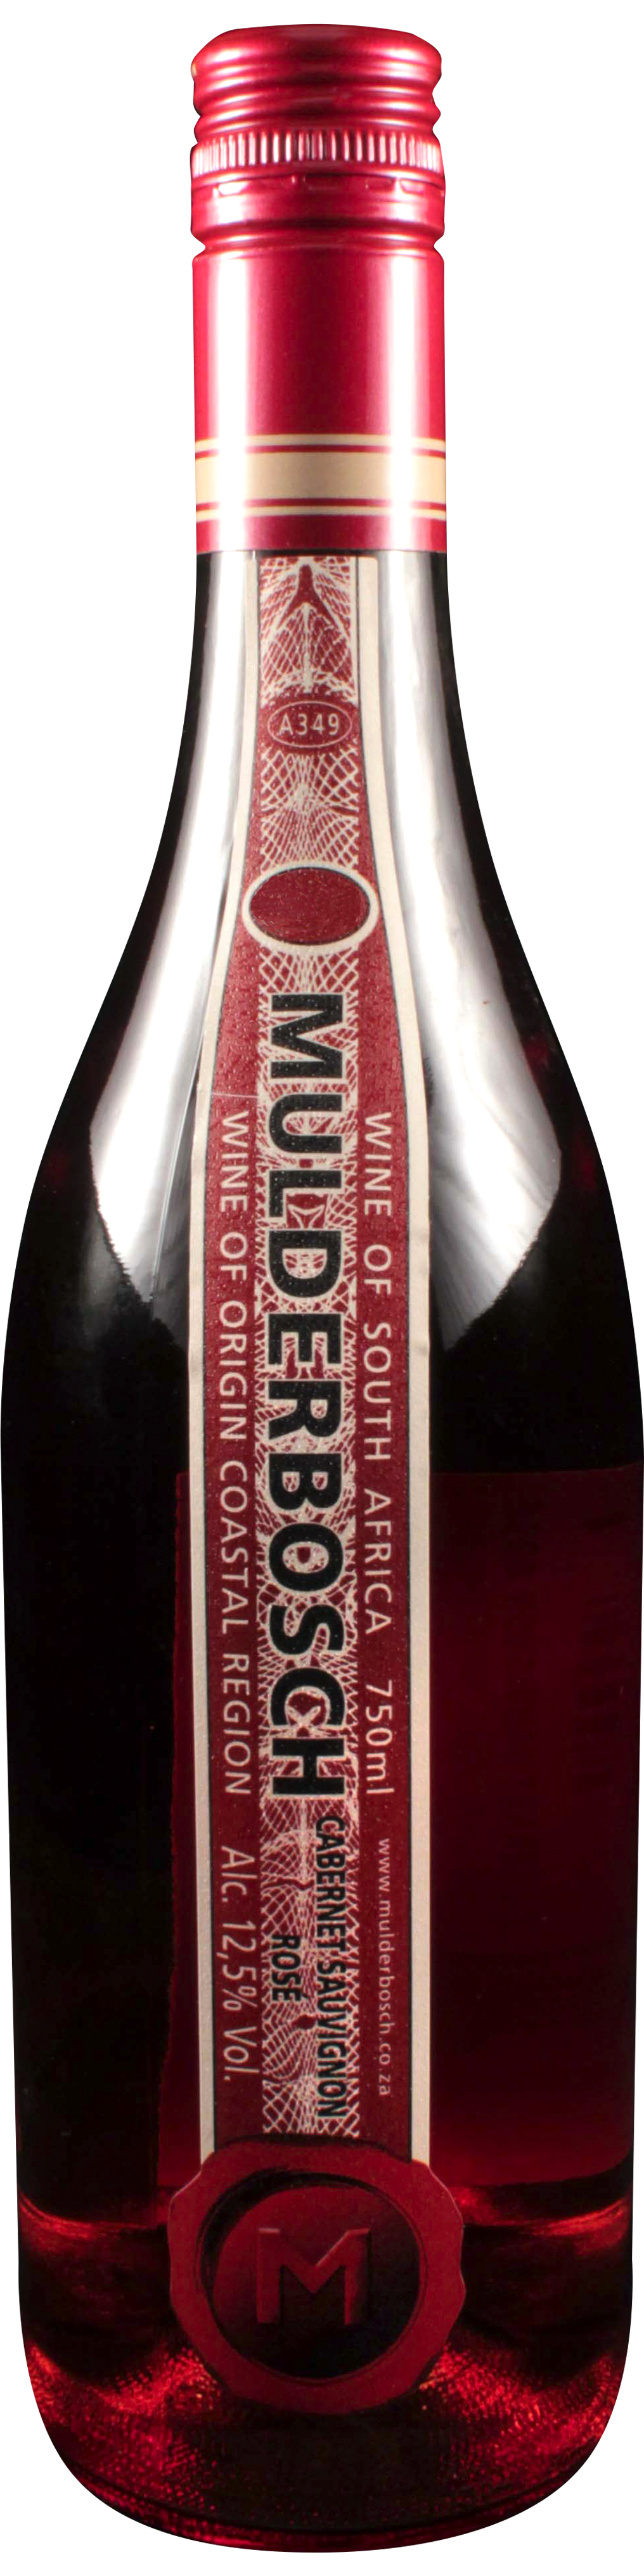 Bottle shot of 2013 Cabernet Sauvignon Rose